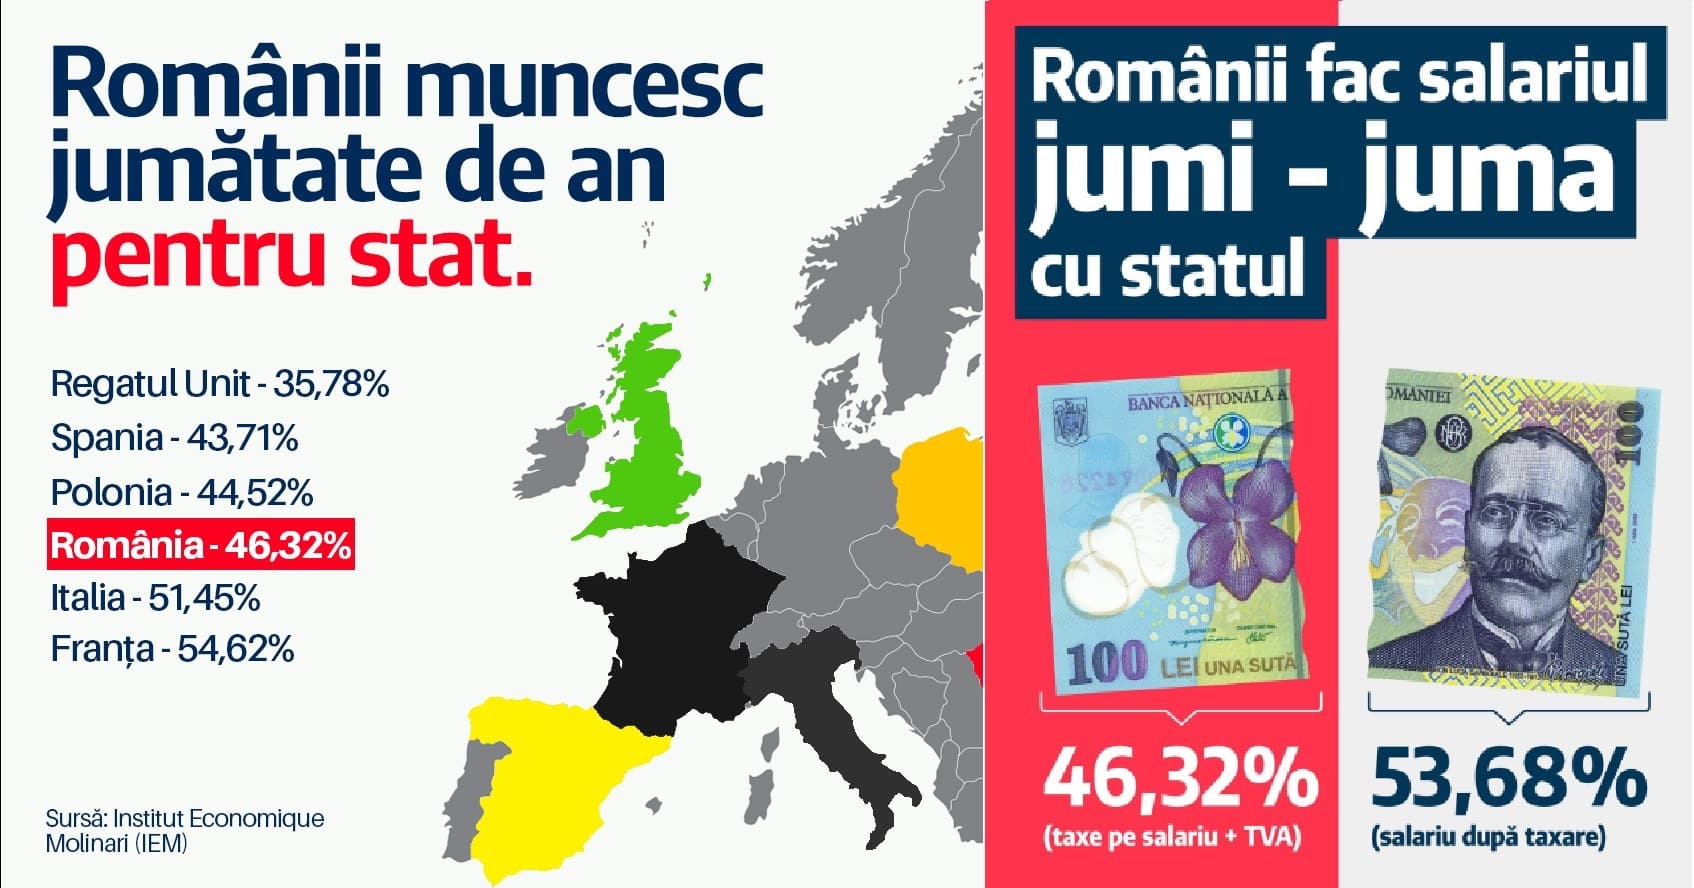 salariu jumi juma stat - Moldova Invest